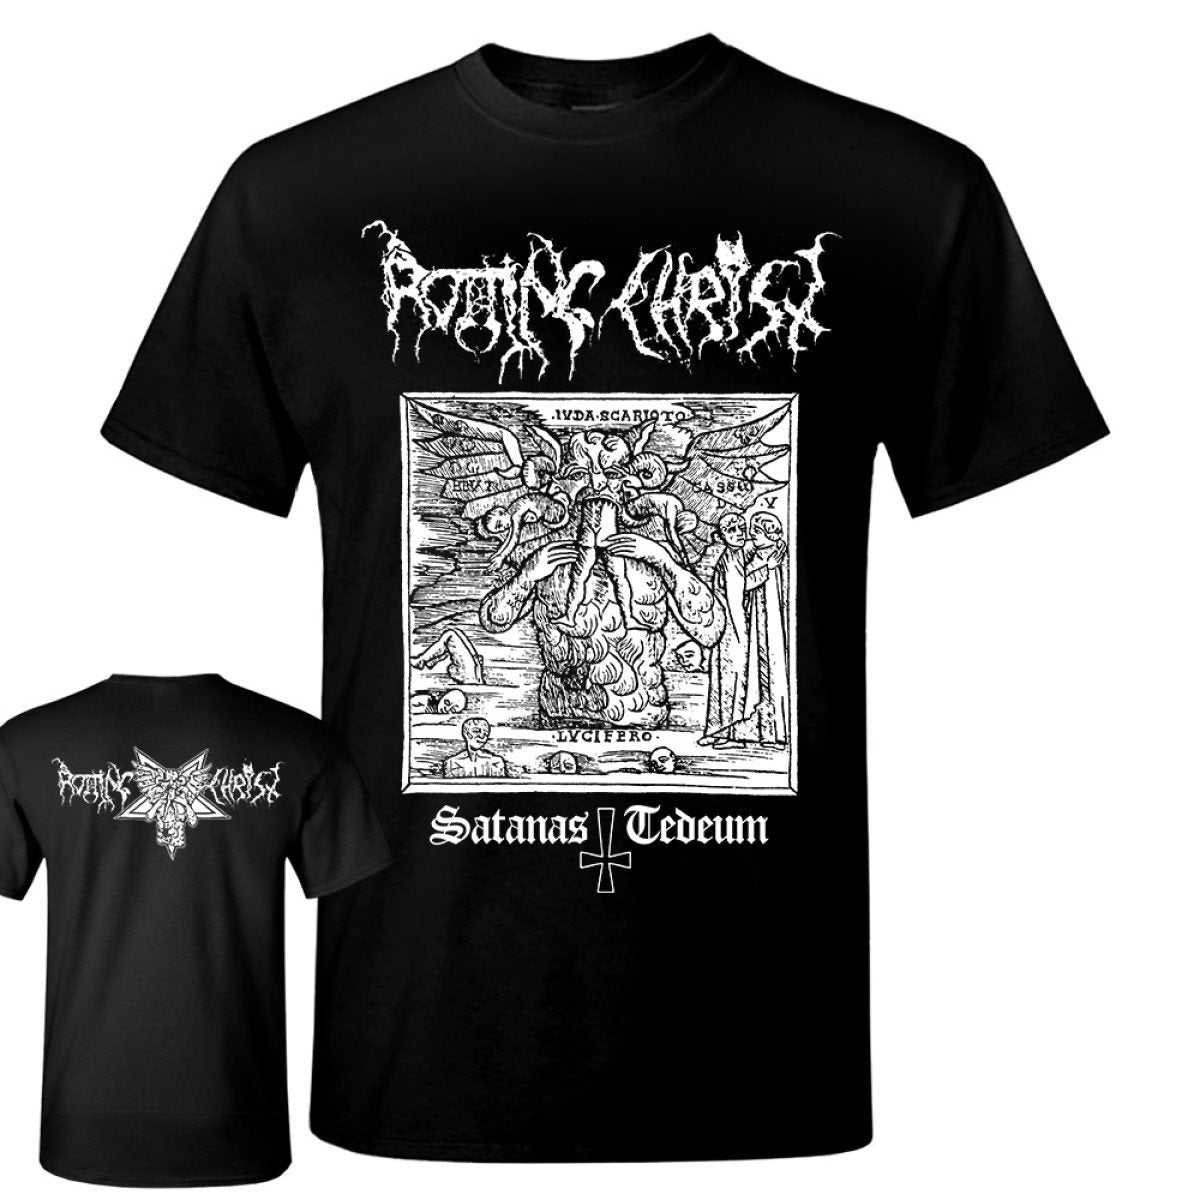 Rotting Christ "Satanas Tedeum" T shirt